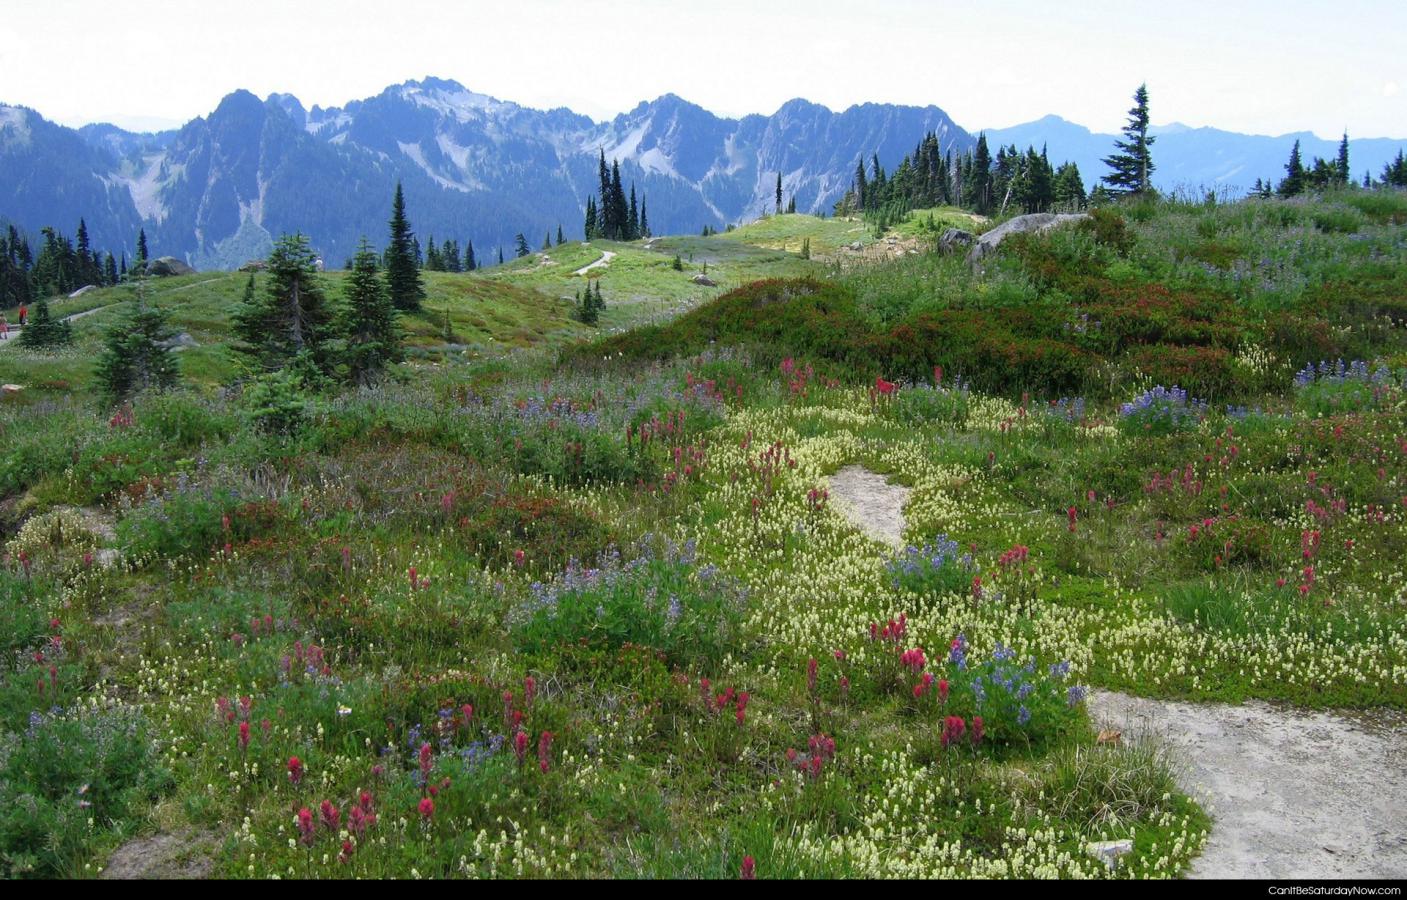 Flower hills - Hills near a mountain with wild flowers